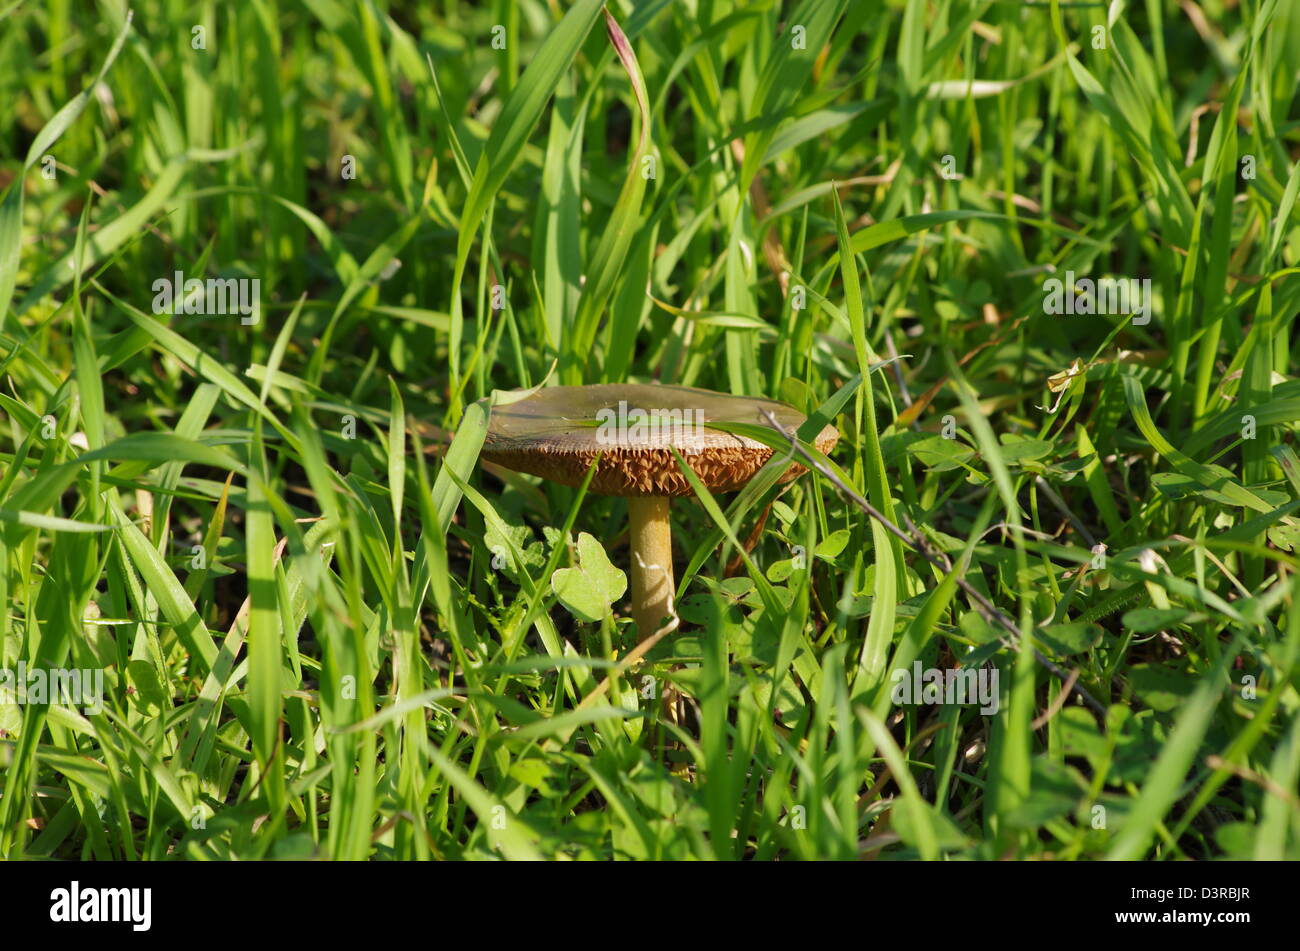 A mushroom in a field of green grass. Stock Photo